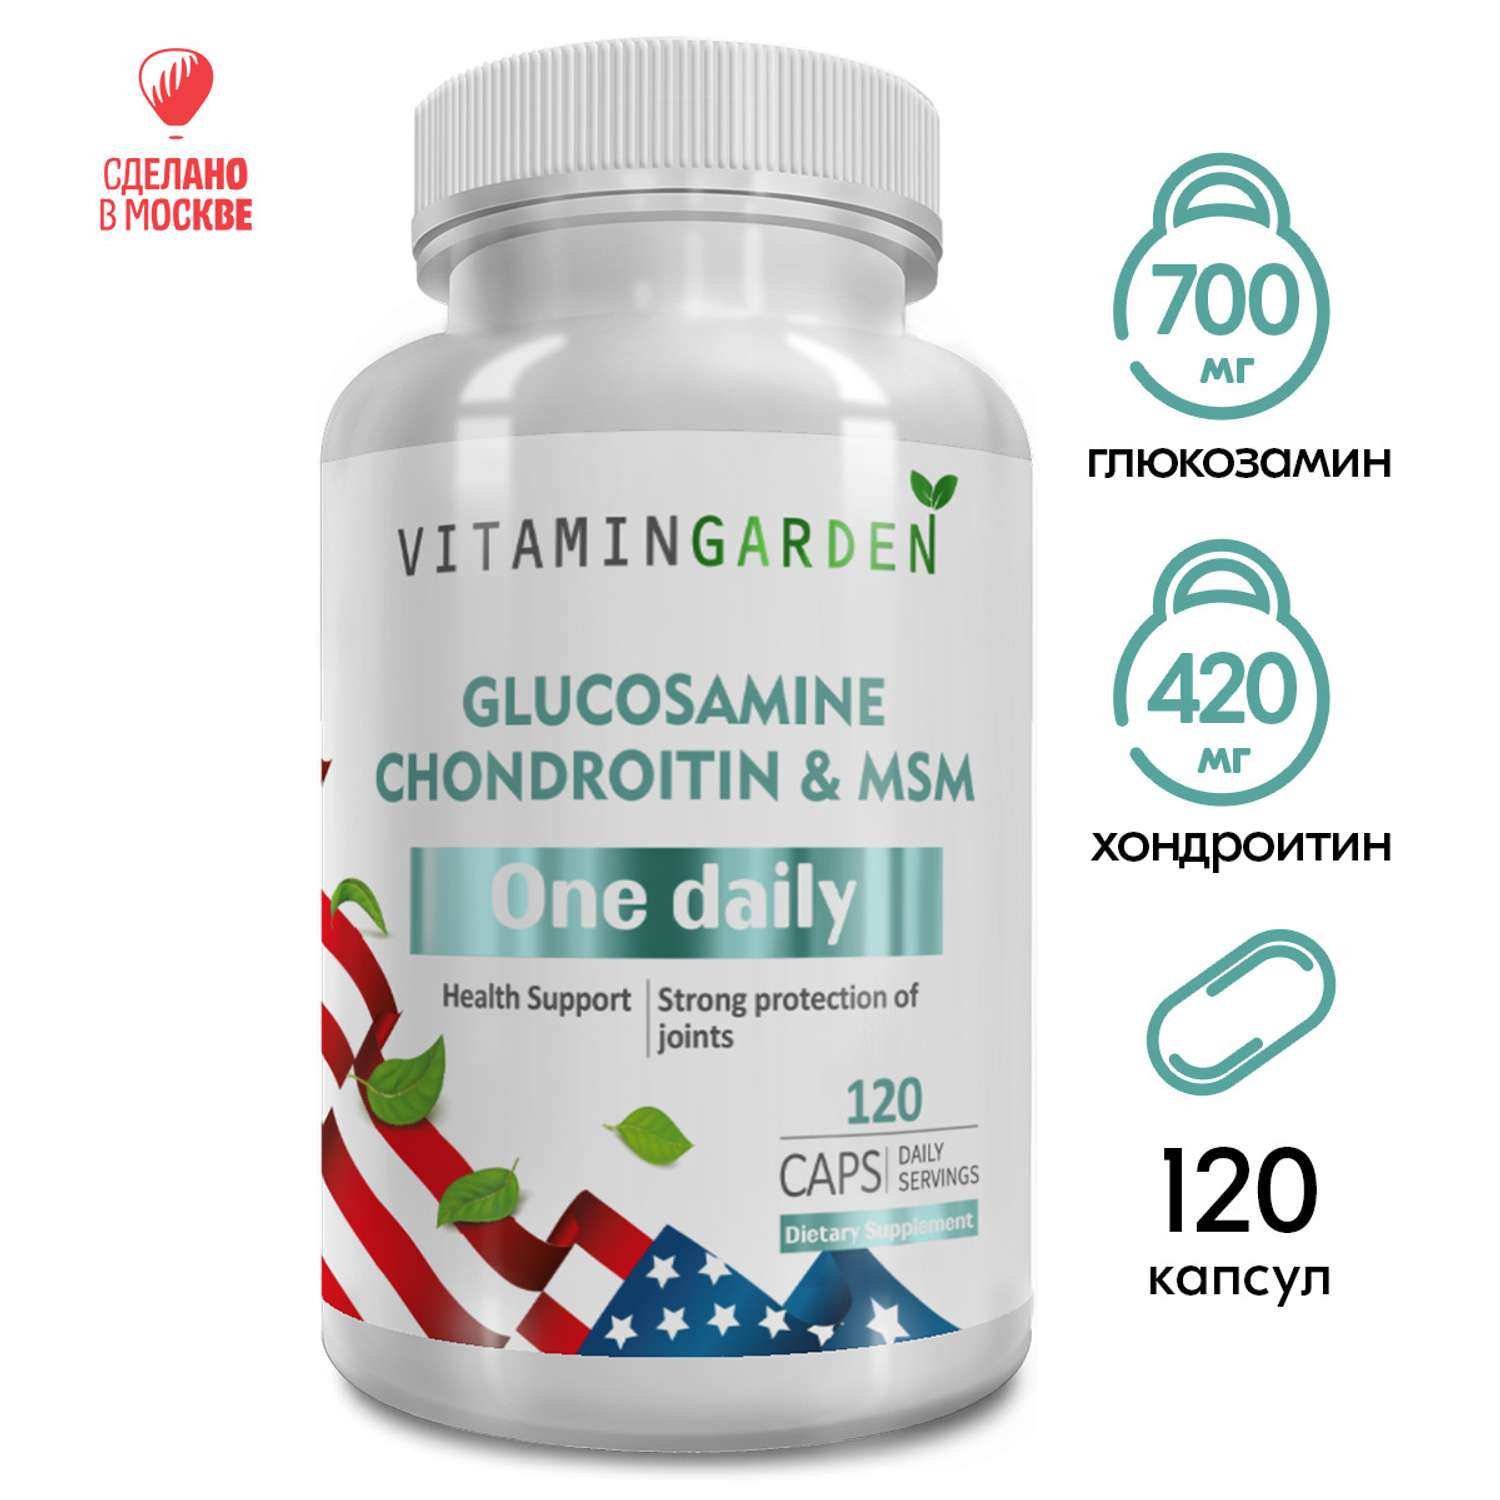 Глюкозамин и Хондроитин МСМ VITAMIN GARDEN витамины для суставов и связок 120 капсул - фото 1